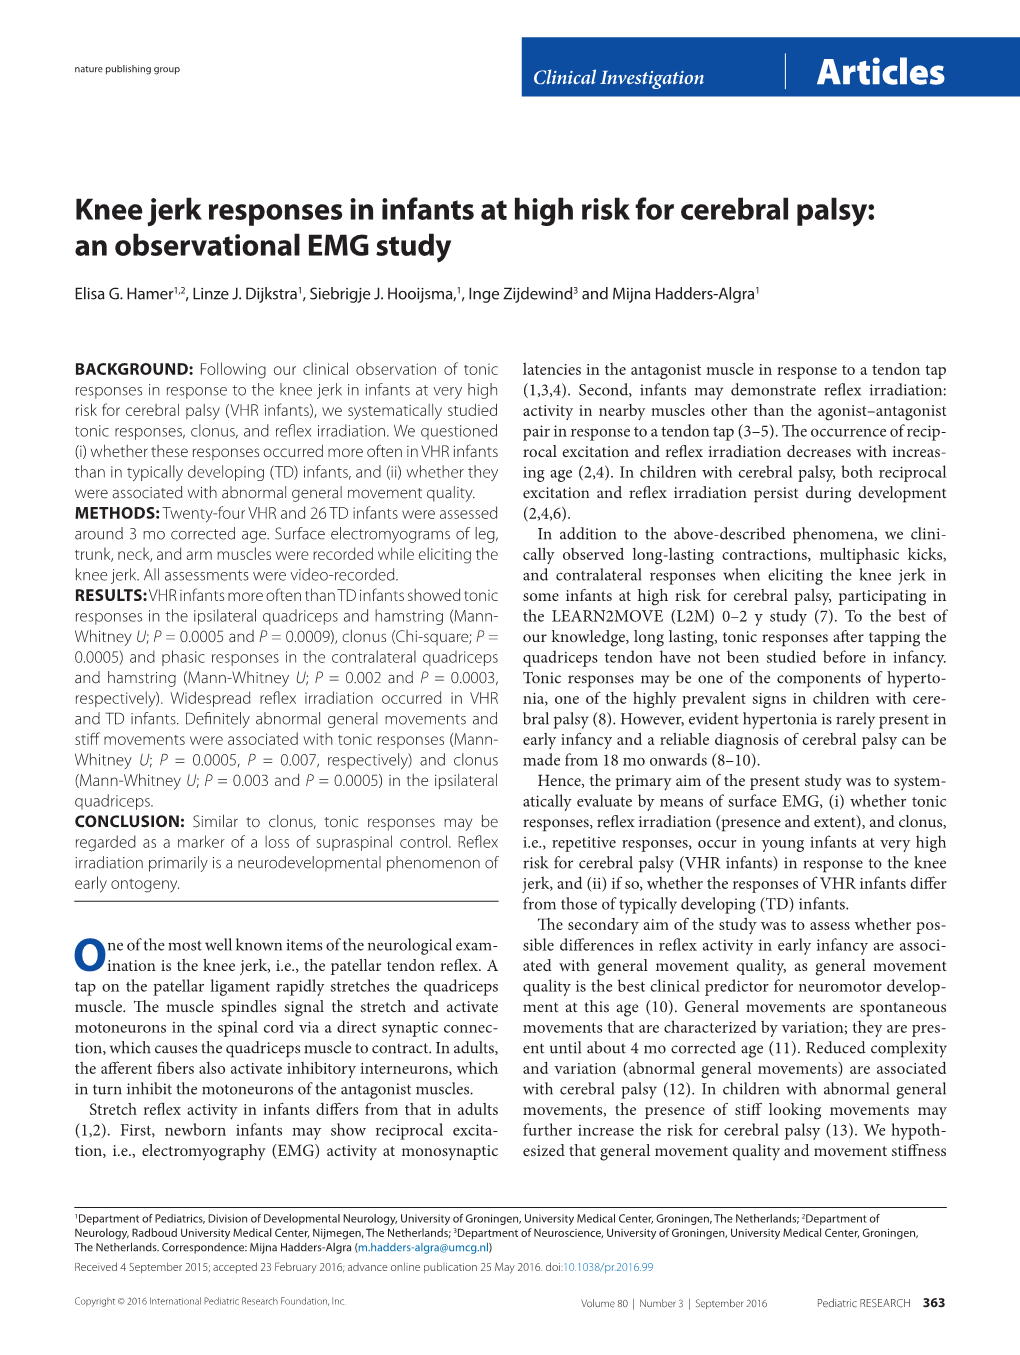 Knee Jerk Responses in Infants at High Risk for Cerebral Palsy: an Observational EMG Study